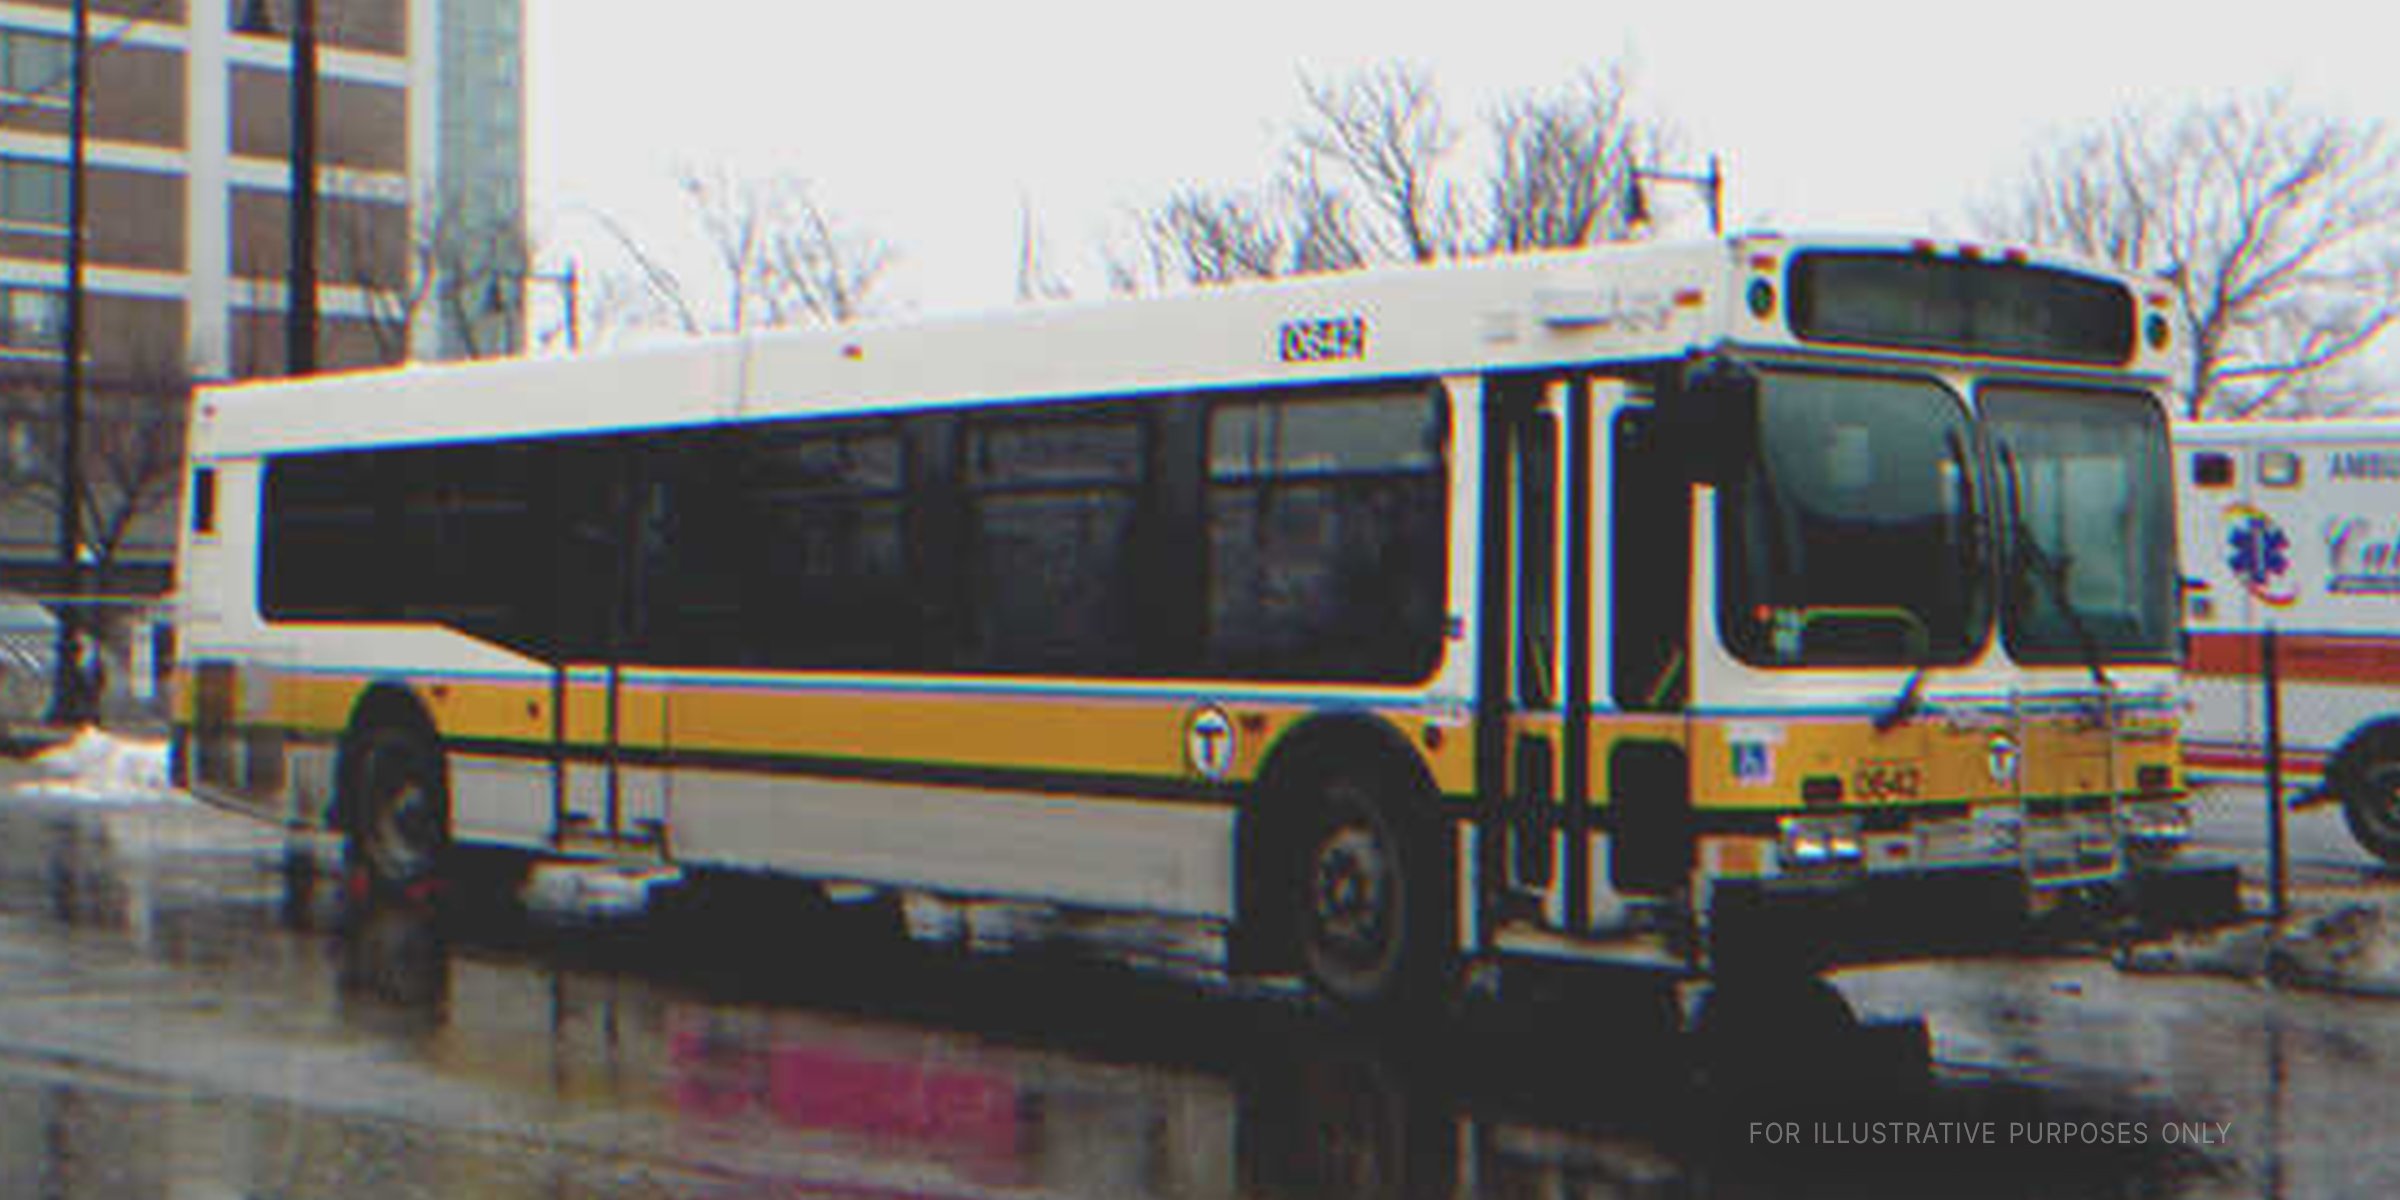 An urban bus. | Source: Pexels